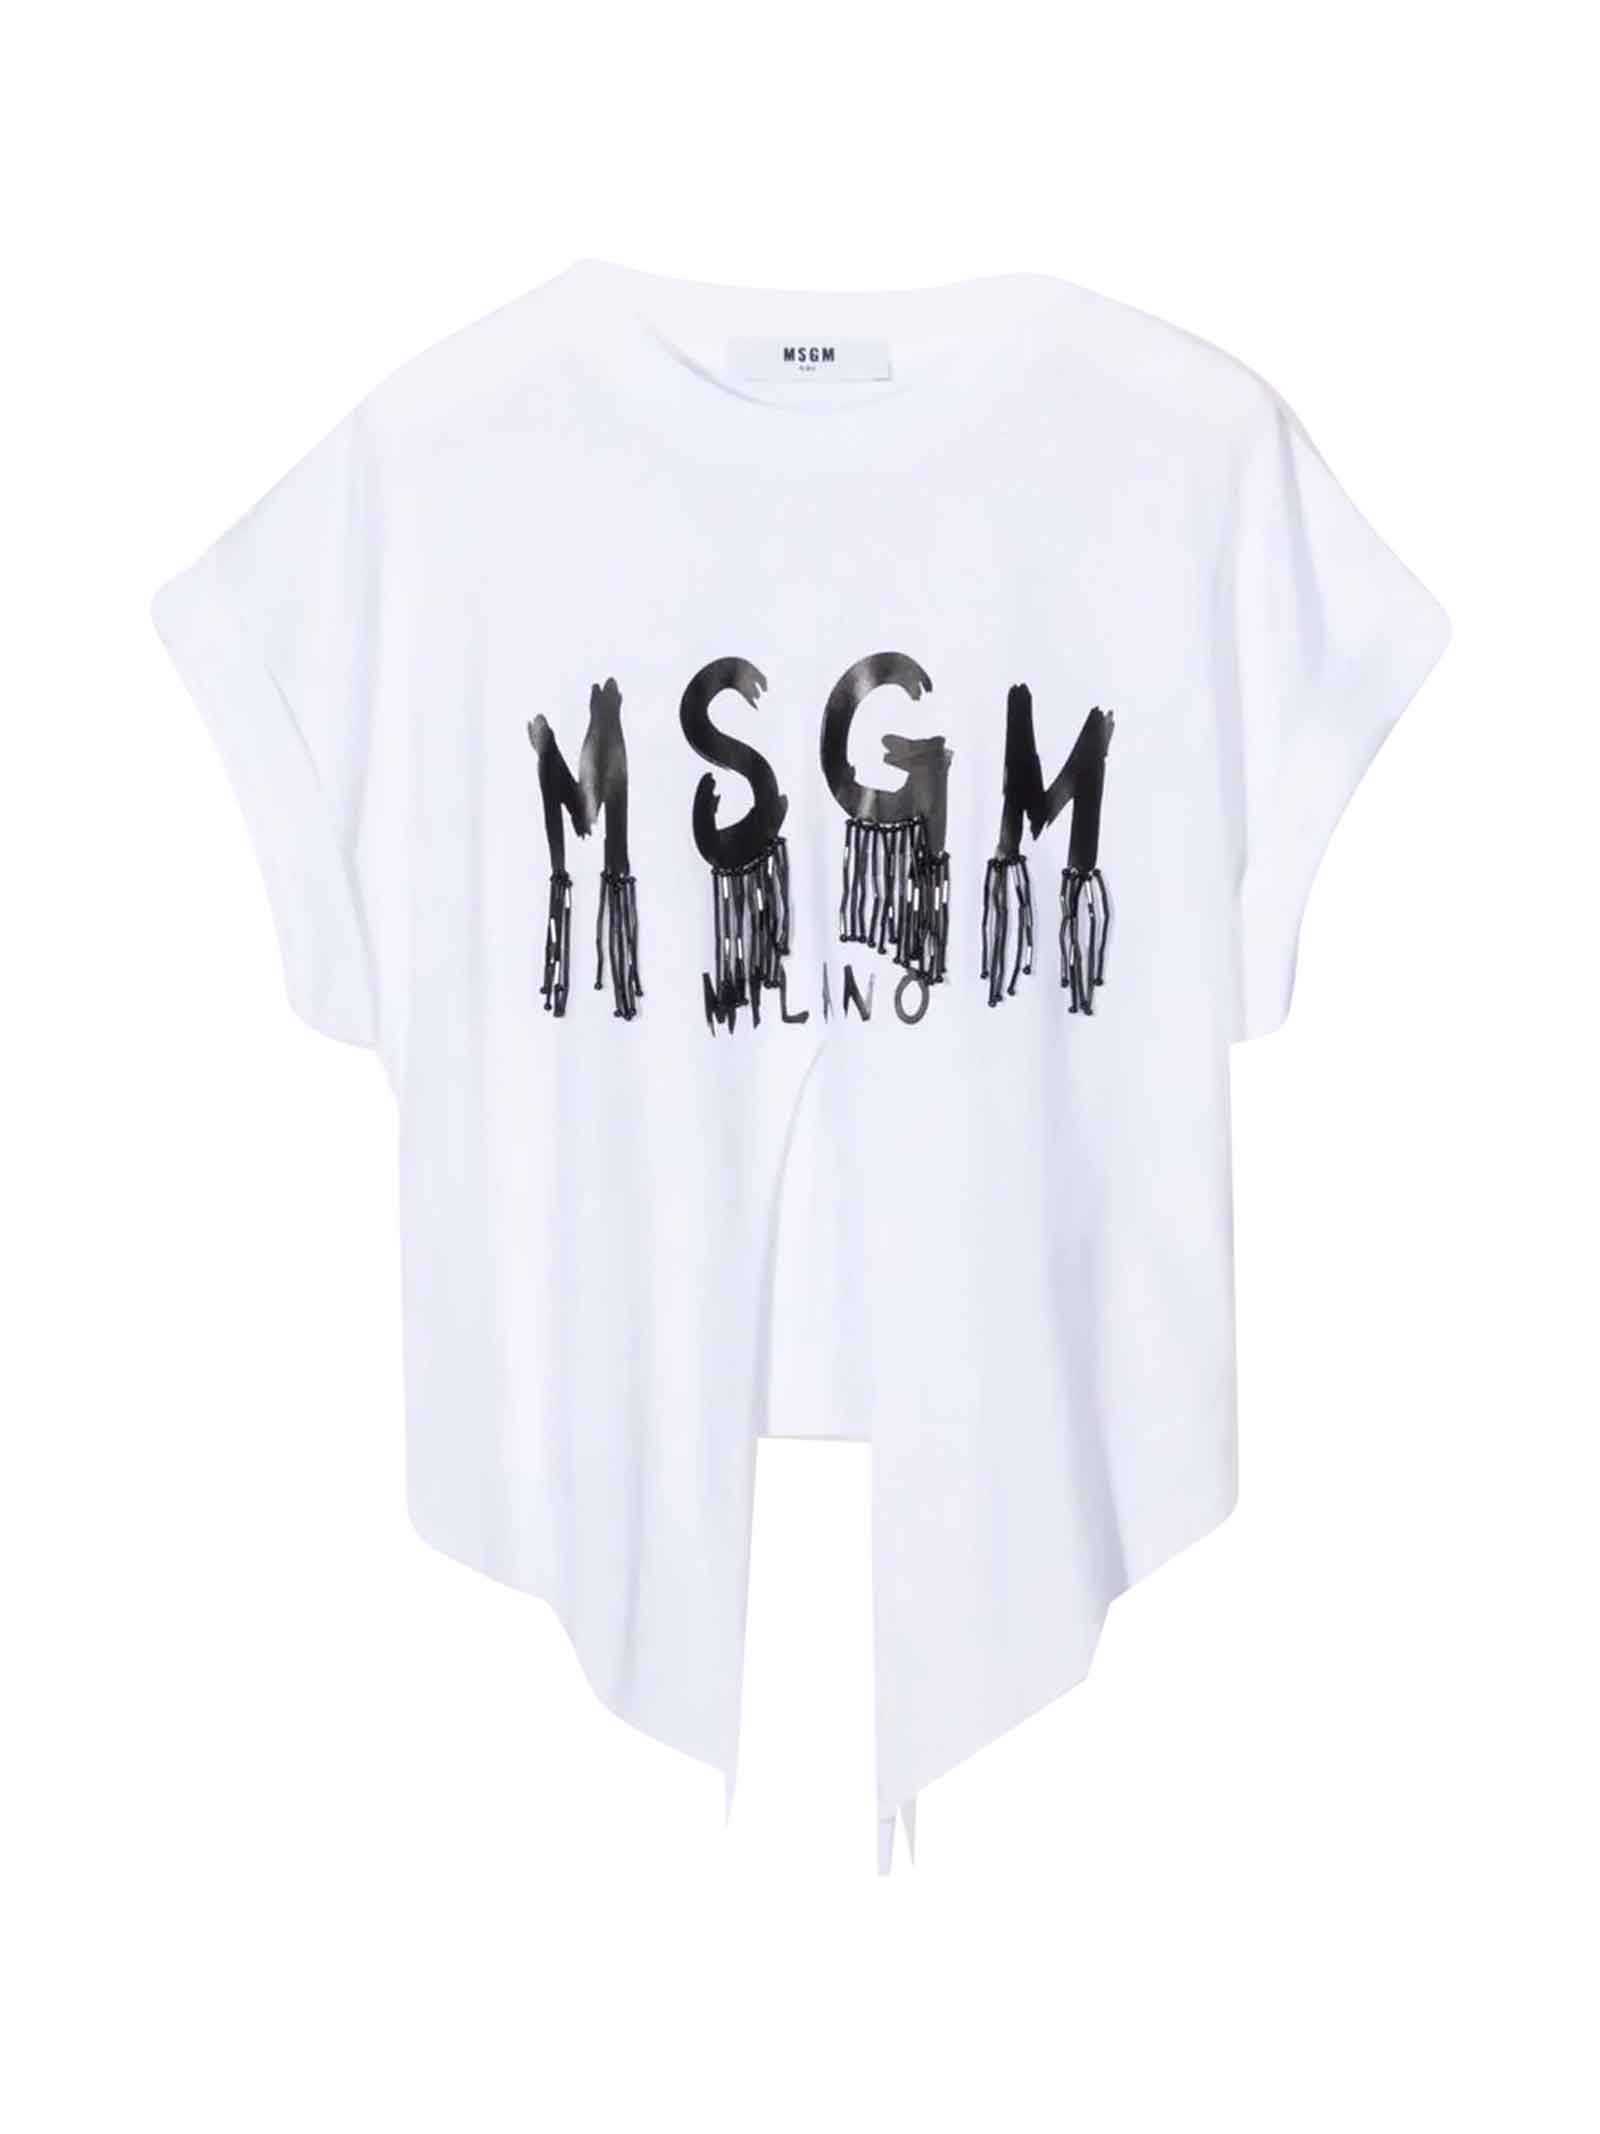 MSGM White T-shirt Teen Girl